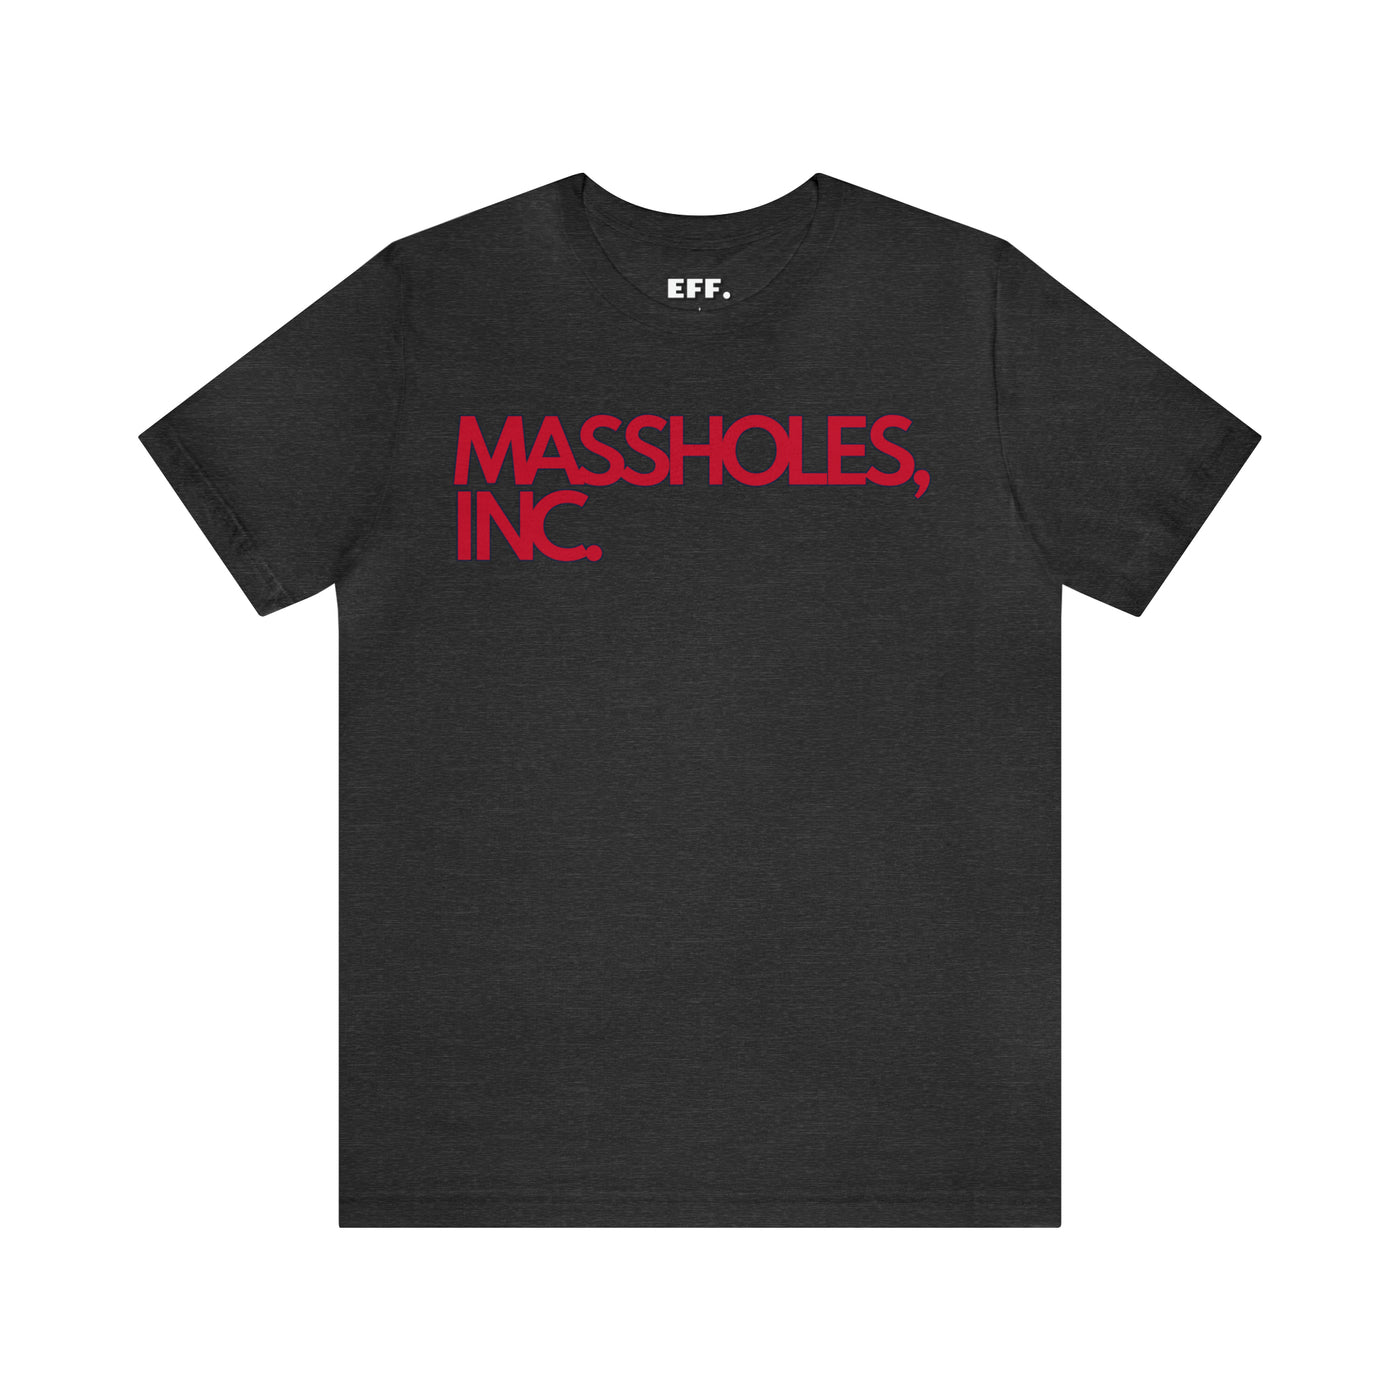 Massholes, Inc.